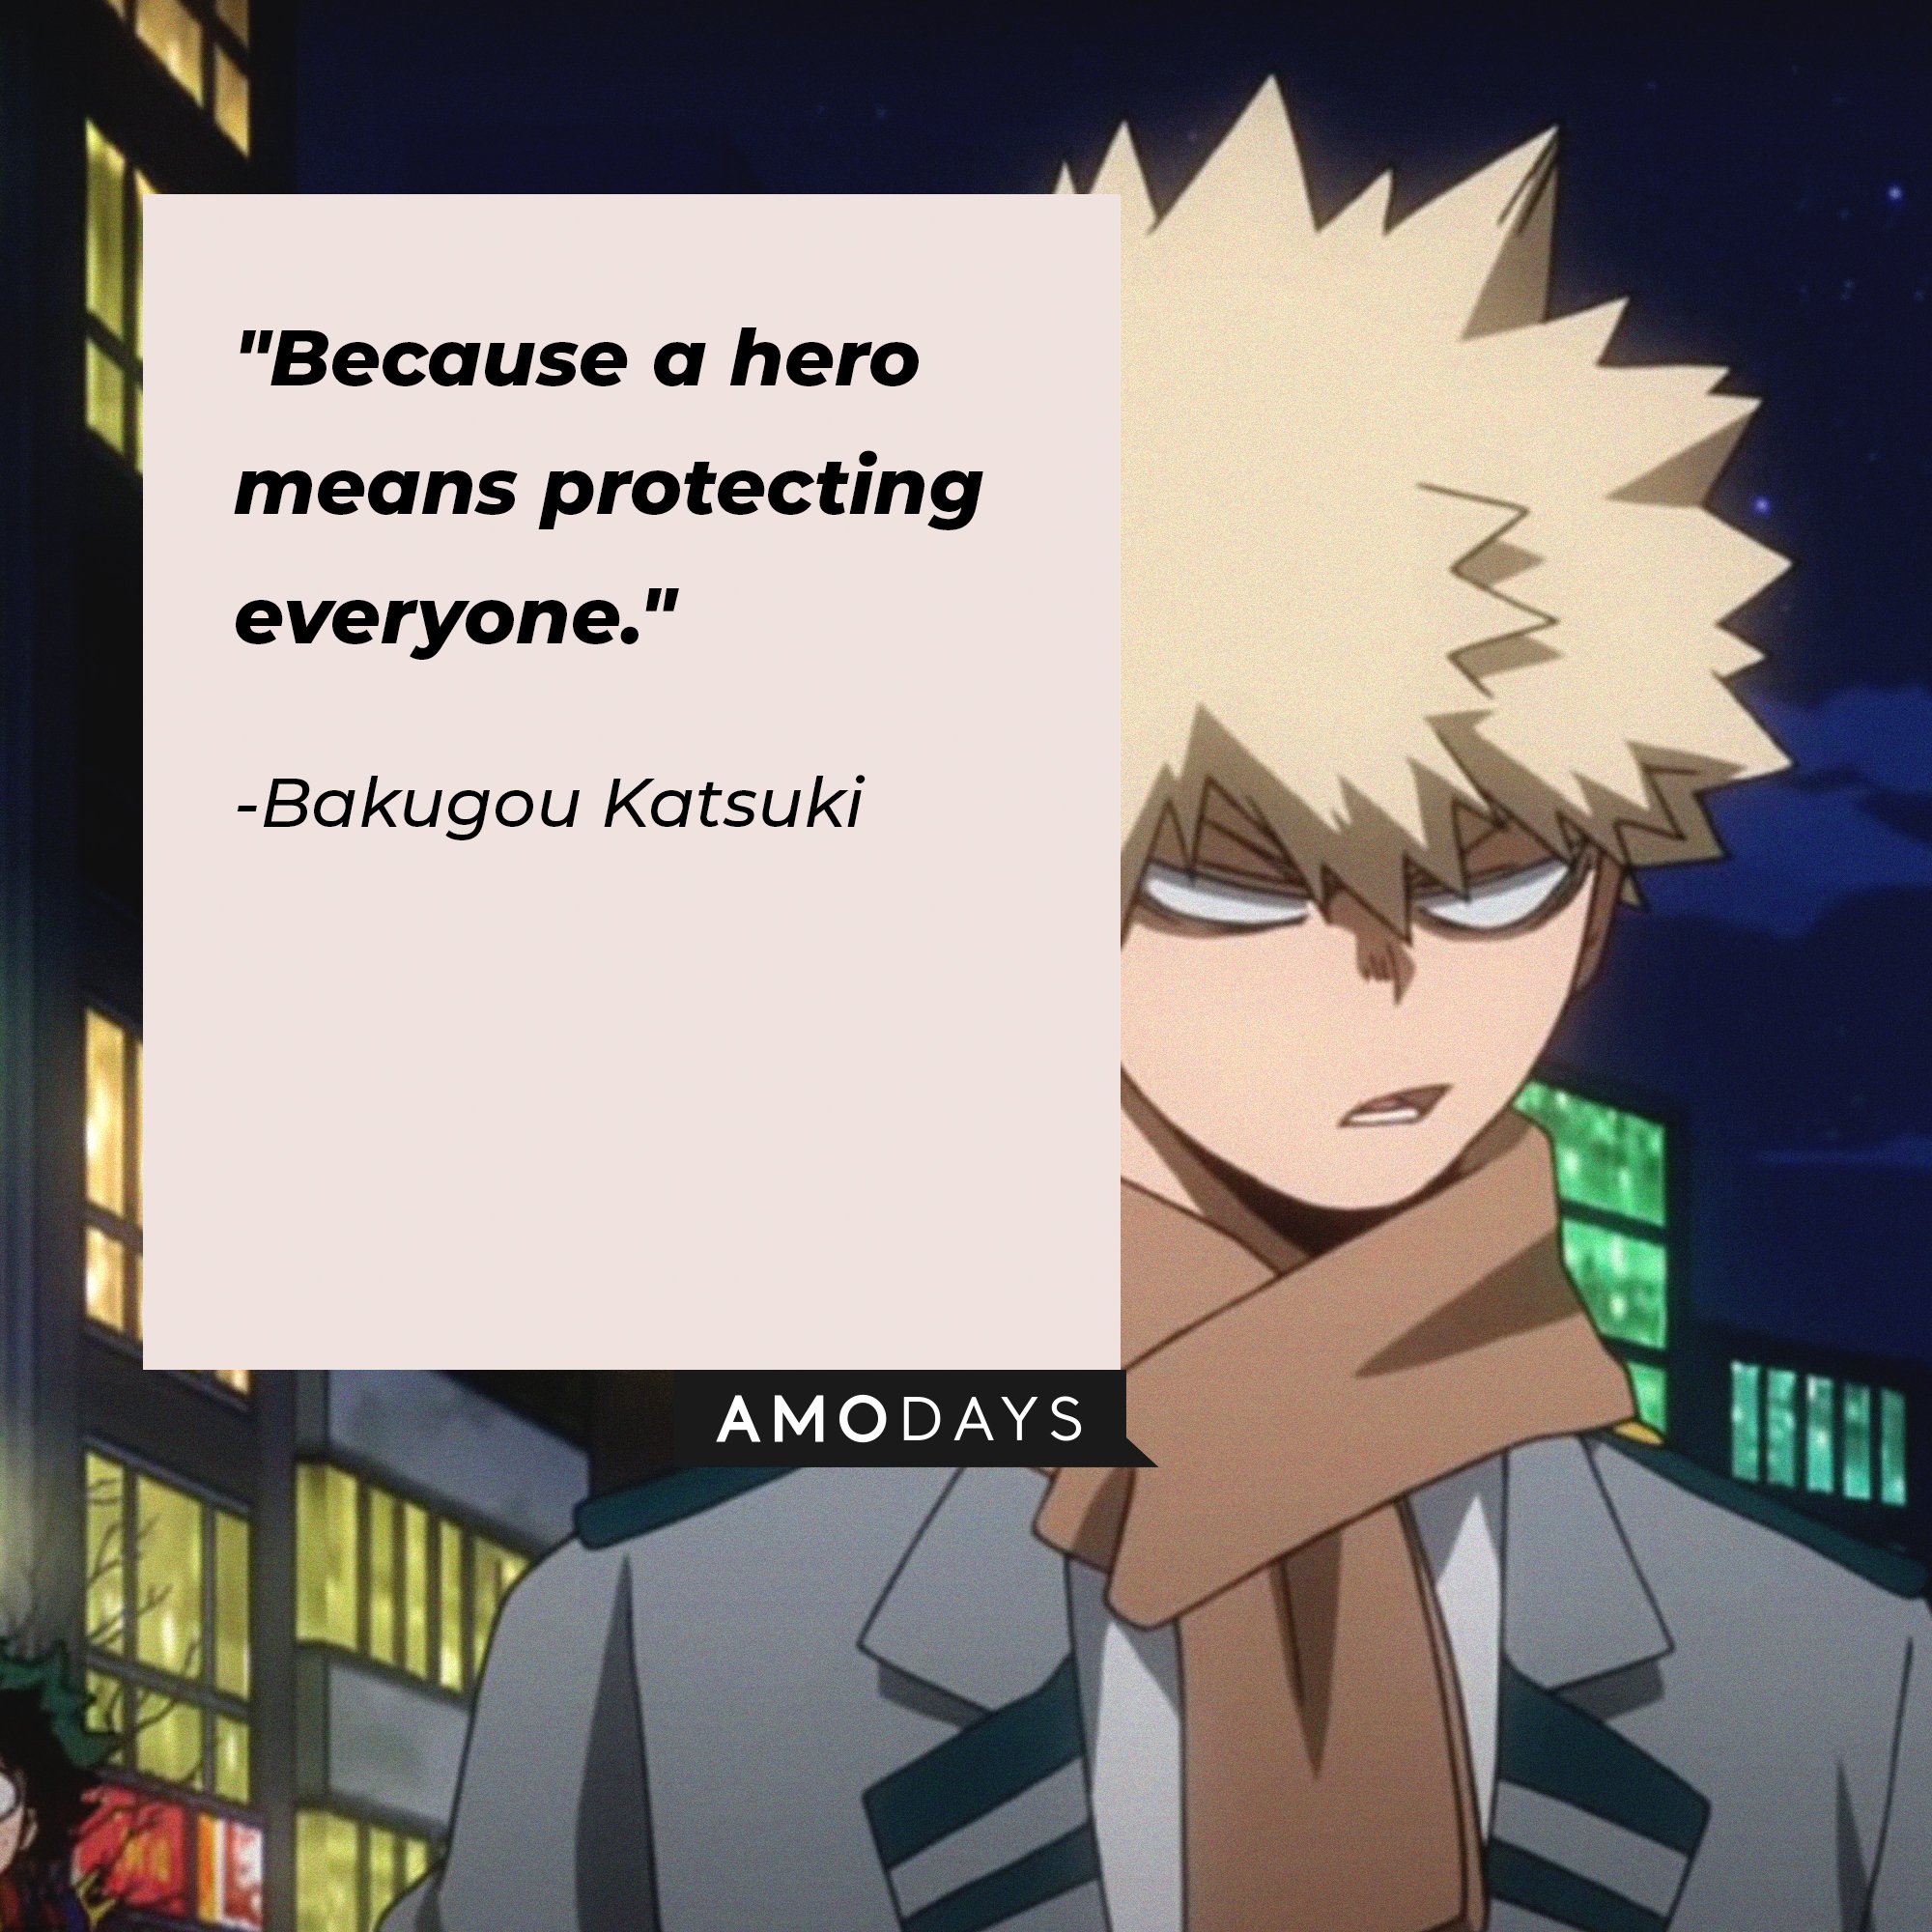 Bakugou Katsuki’s quote: "Because a hero means protecting everyone."  | Image: AmoDays